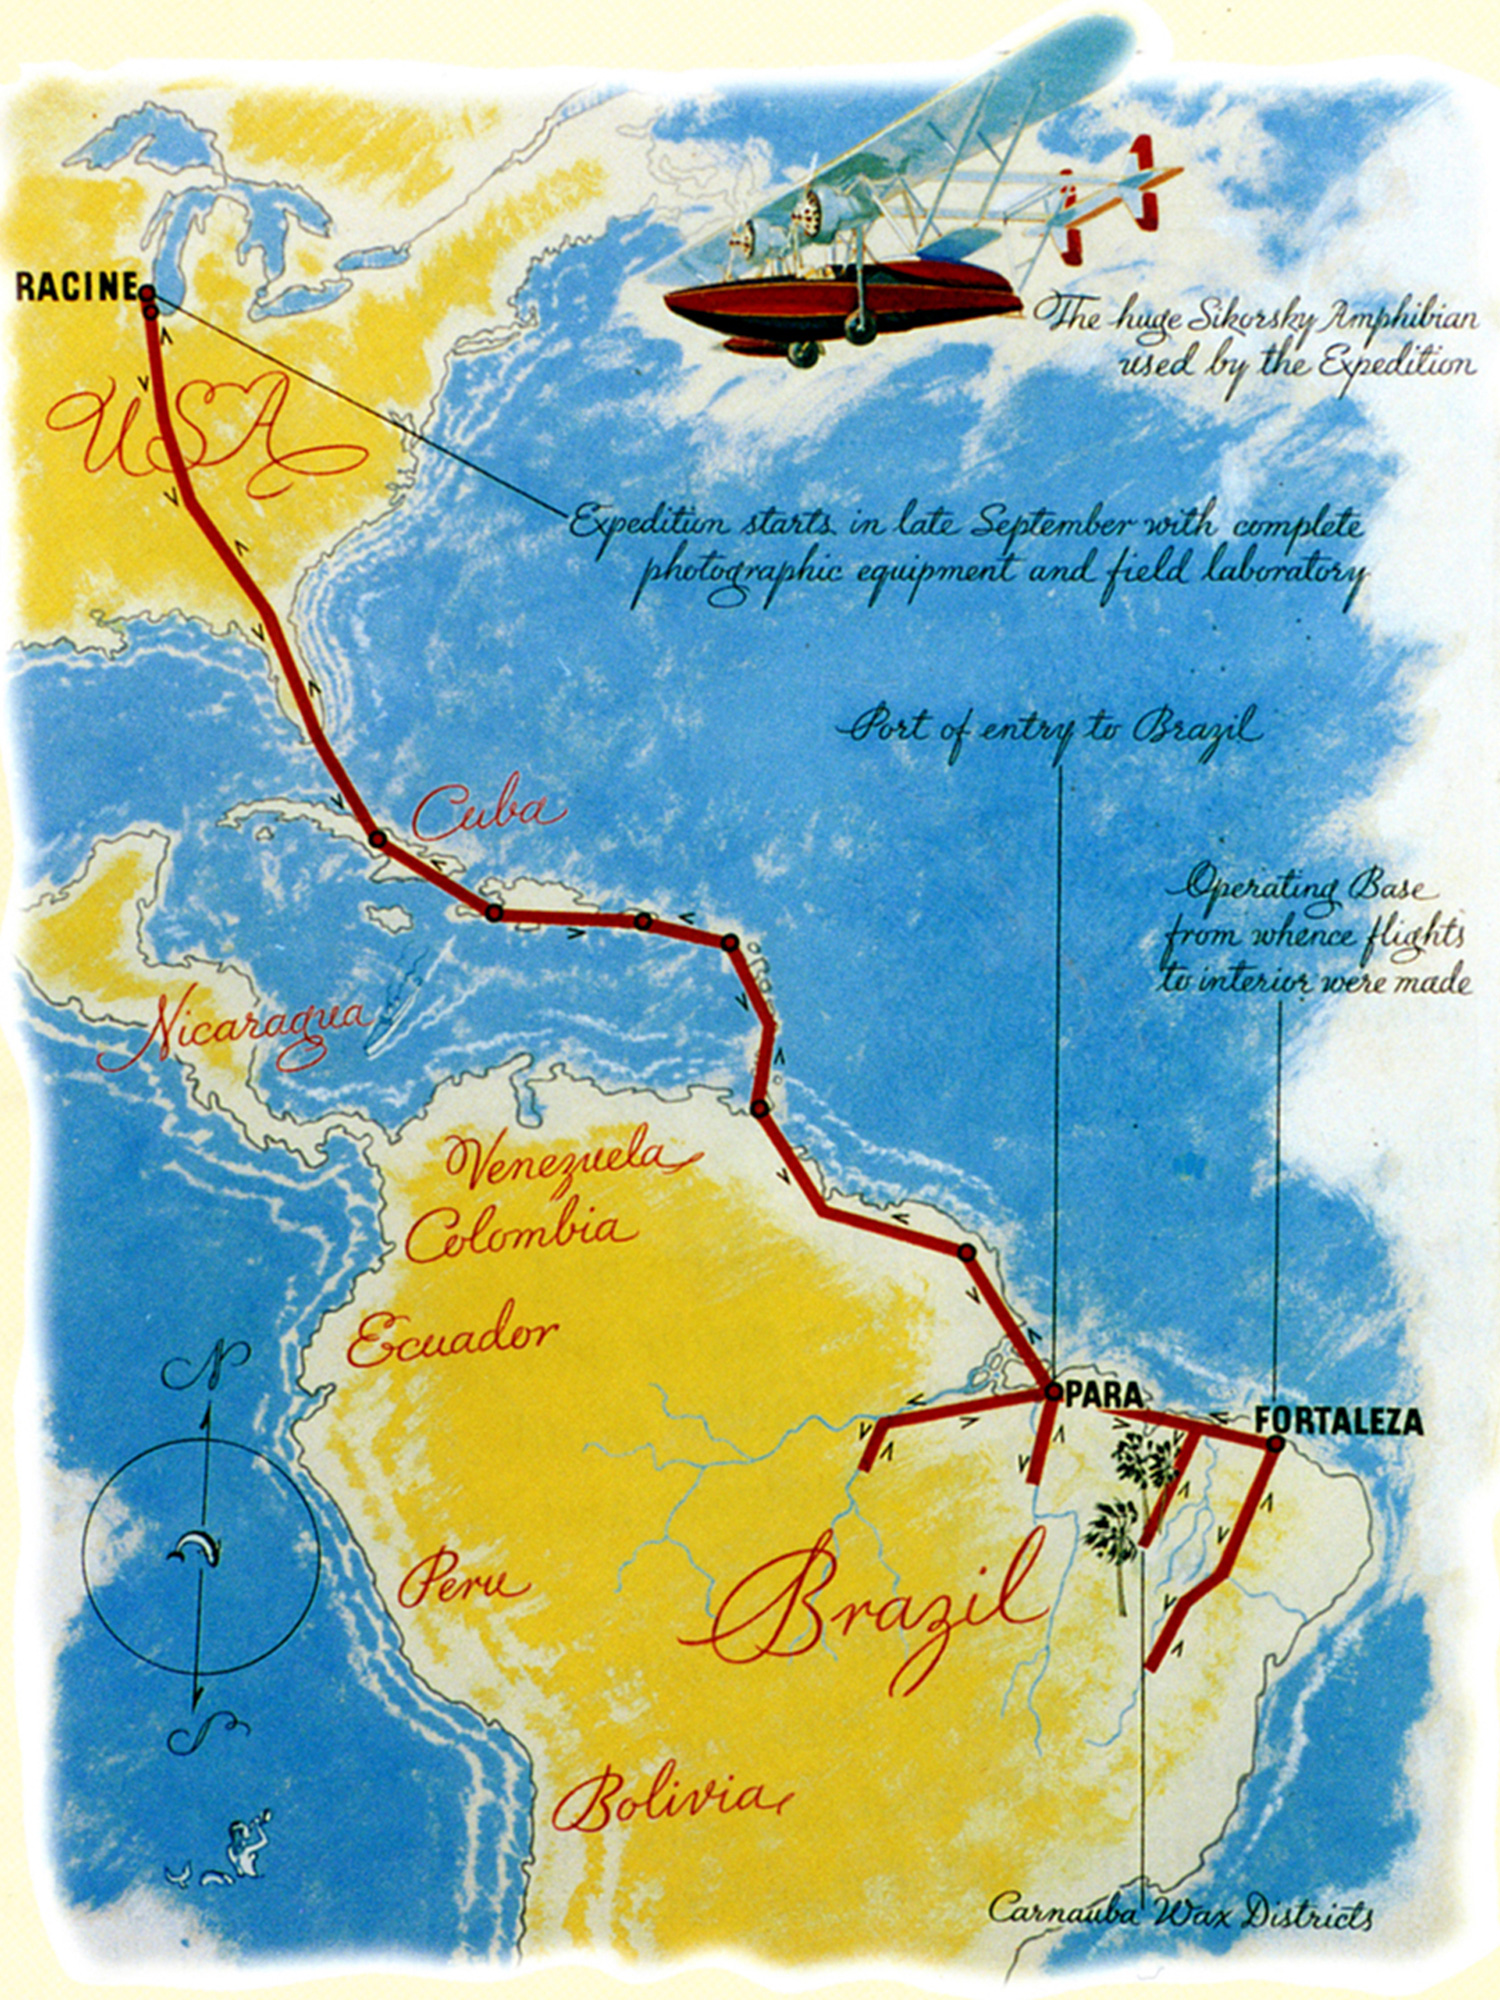 H.F. Johnson Jr.’s 1935 flight path to source carnauba palm wax in Brazil.